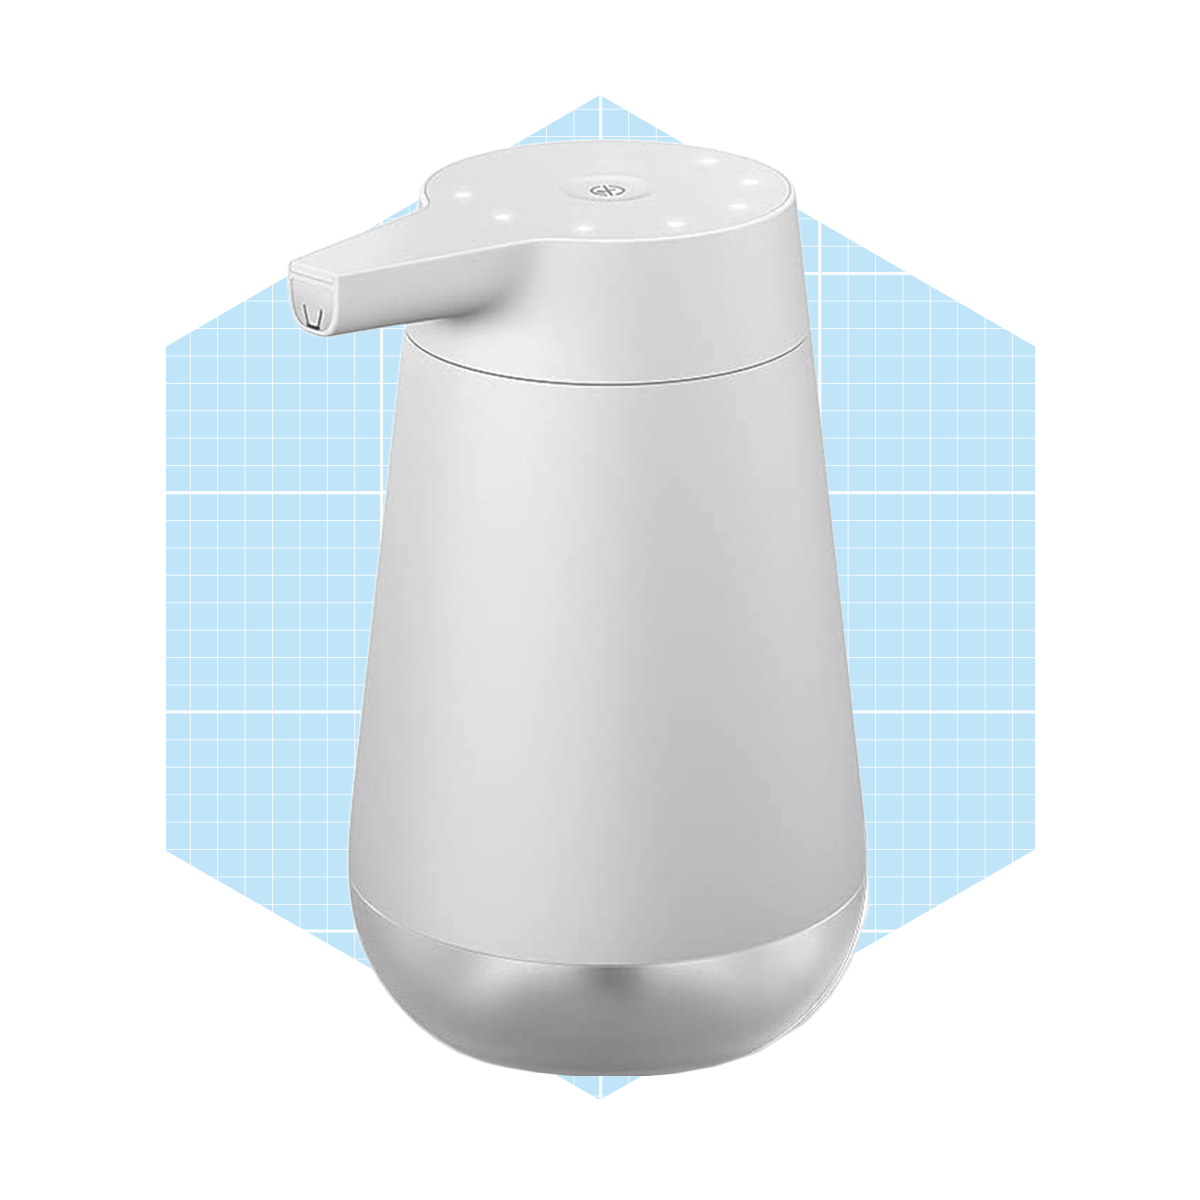 Amazon Smart Soap Dispenser Ecomm Via Amazon.com